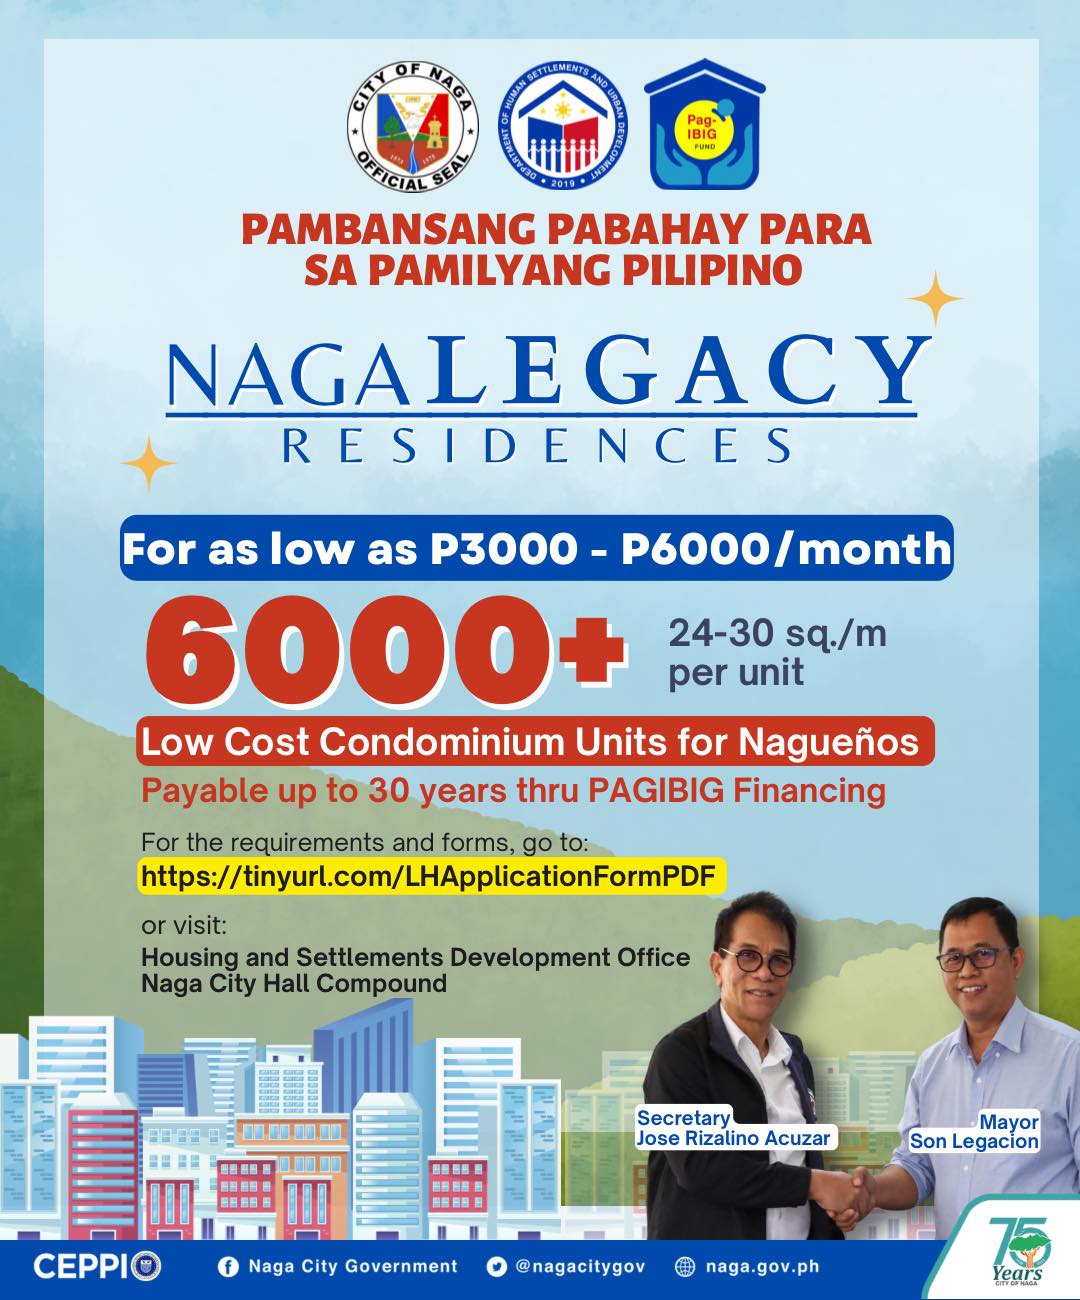 Naga Legacy